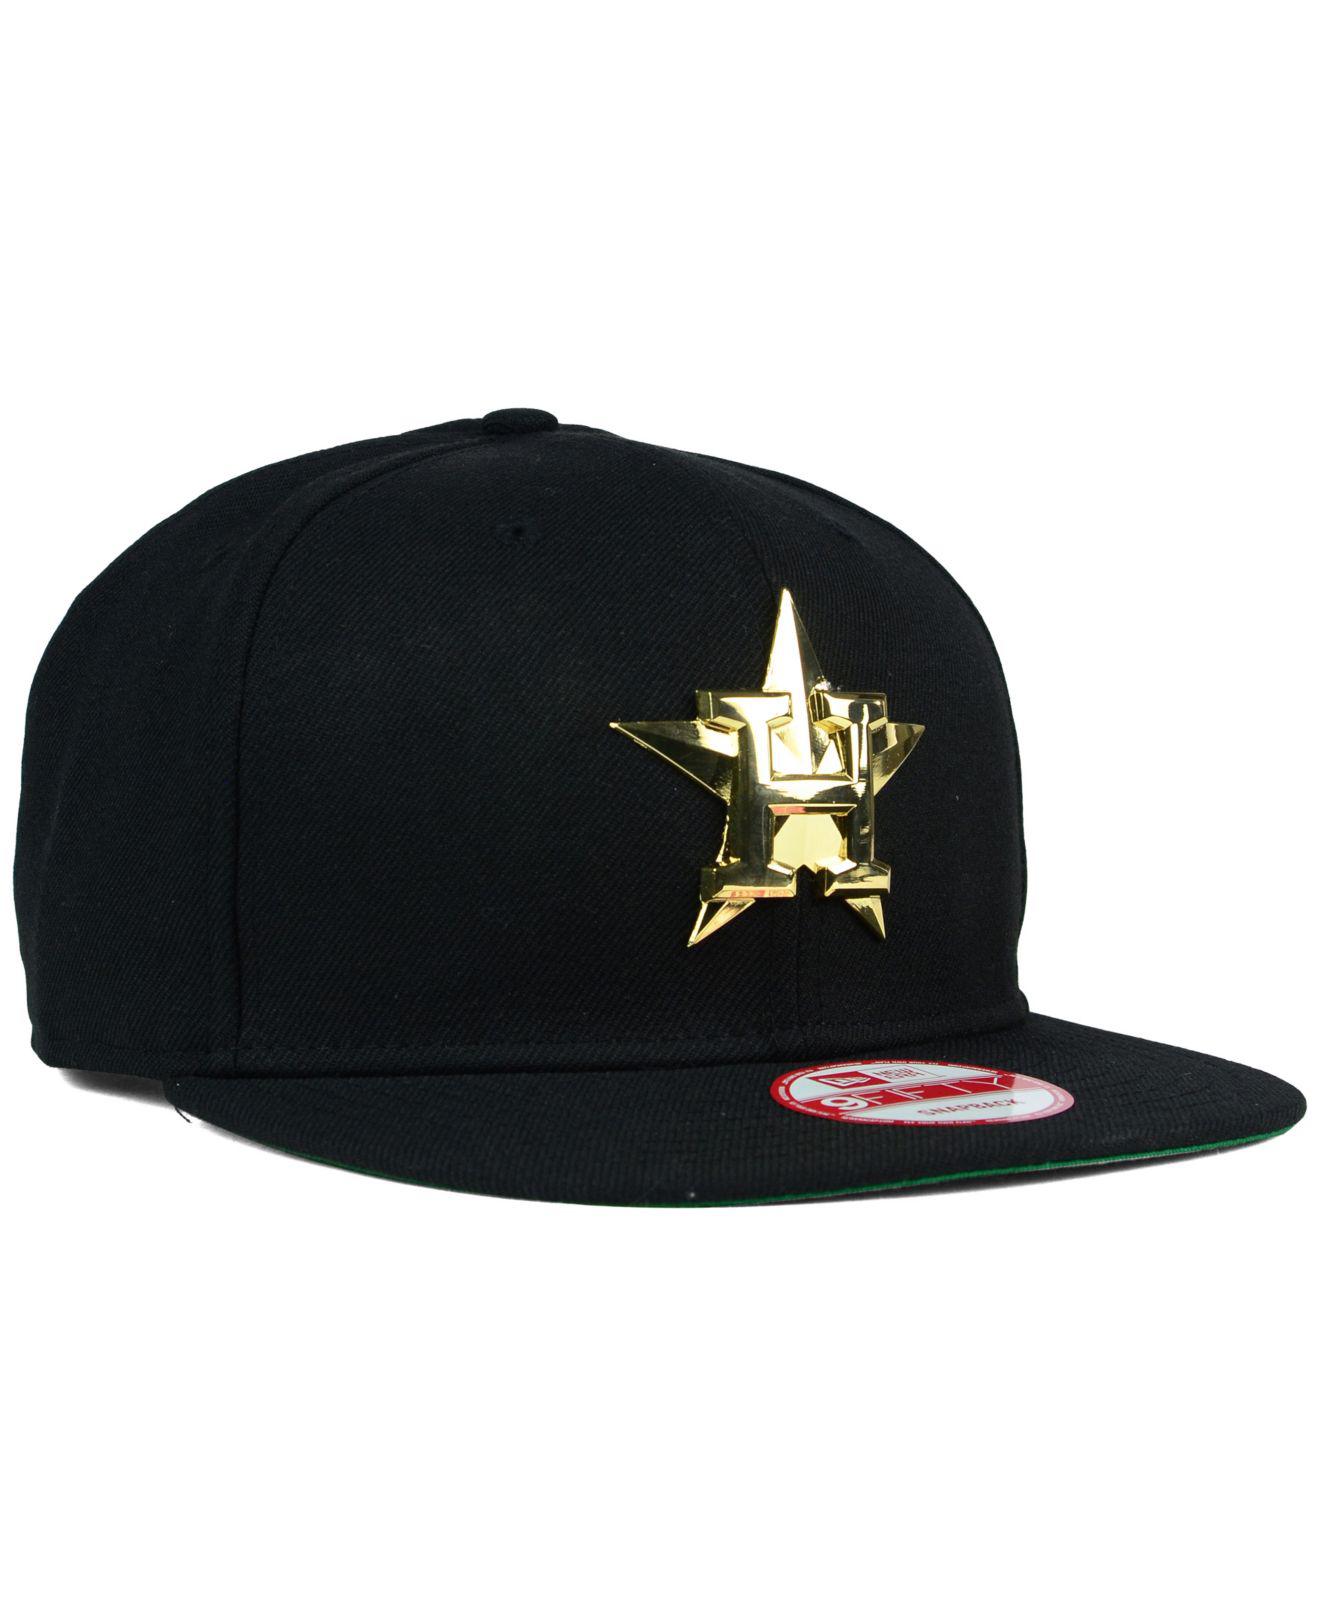 KTZ Houston Astros League O'gold 9fifty Snapback Cap in Black for